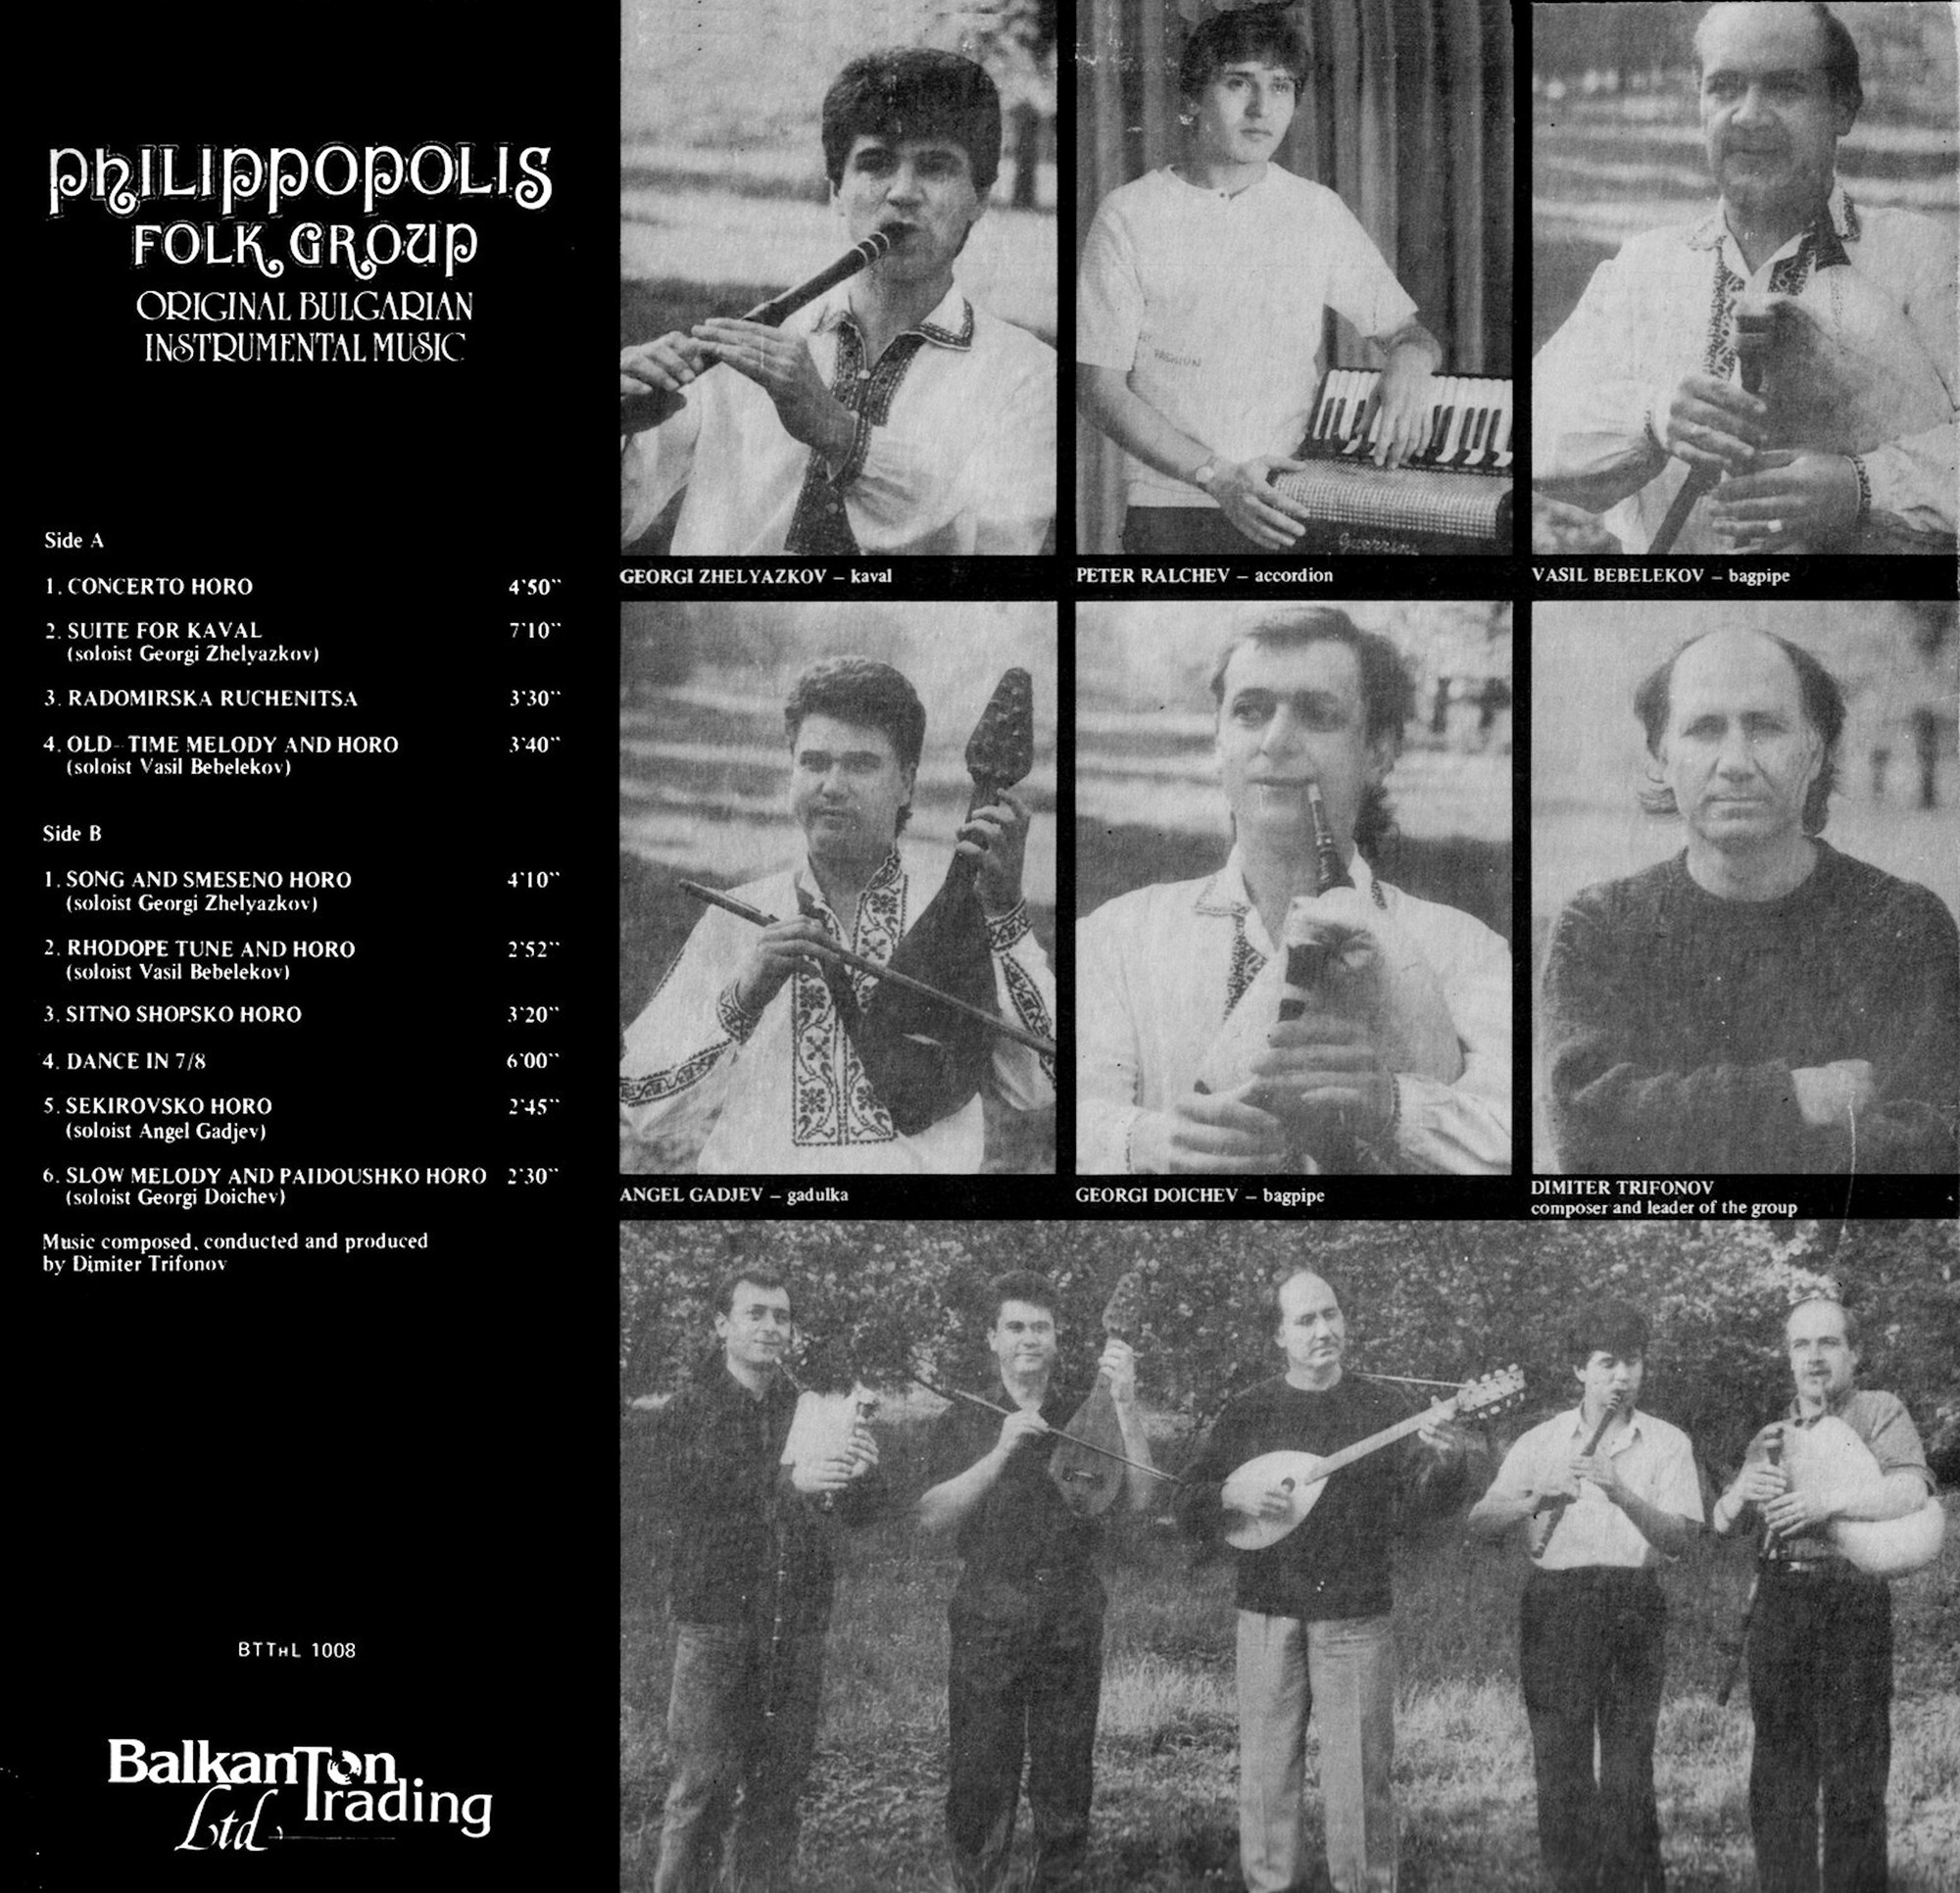 Philippopolis Folk Group - Original Bulgarian Instrumental Music